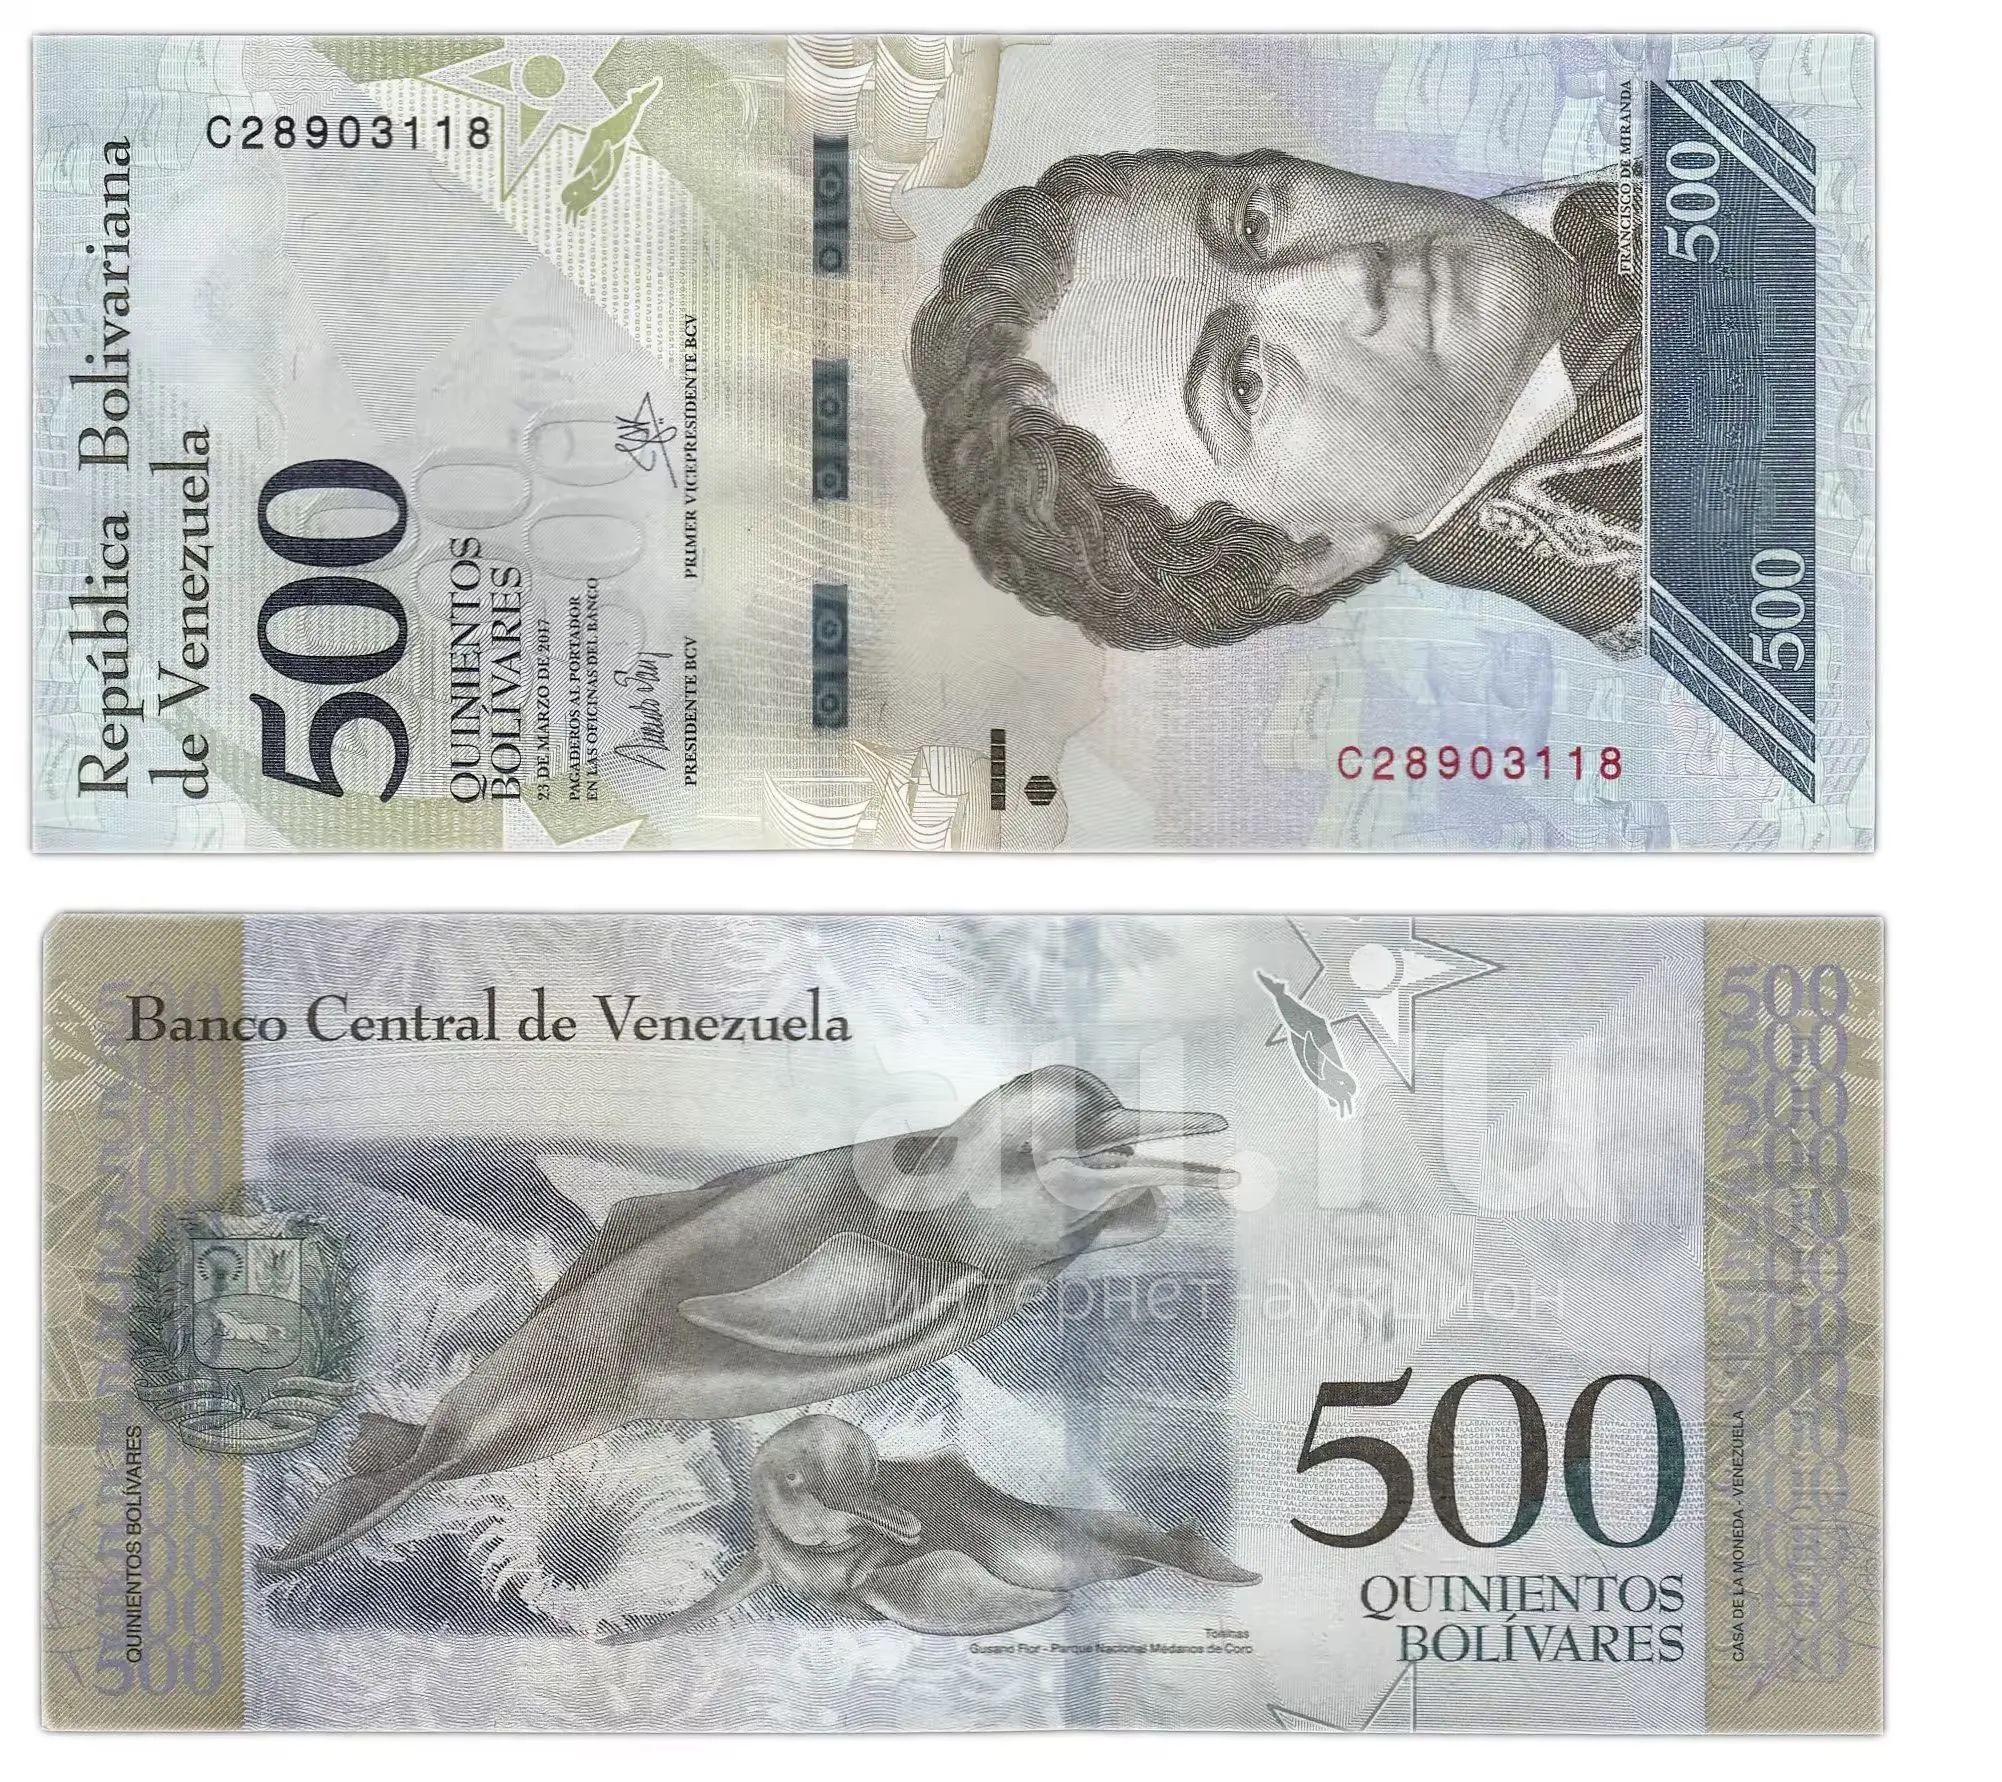 Венесуэла 2017 год. Венесуэла 500 Боливар 2018. Купюра 500 боливаров Венесуэлы. Банкнота Венесуэла 500 боливаров. Банкноты Боливар Венесуэльский Боливар.